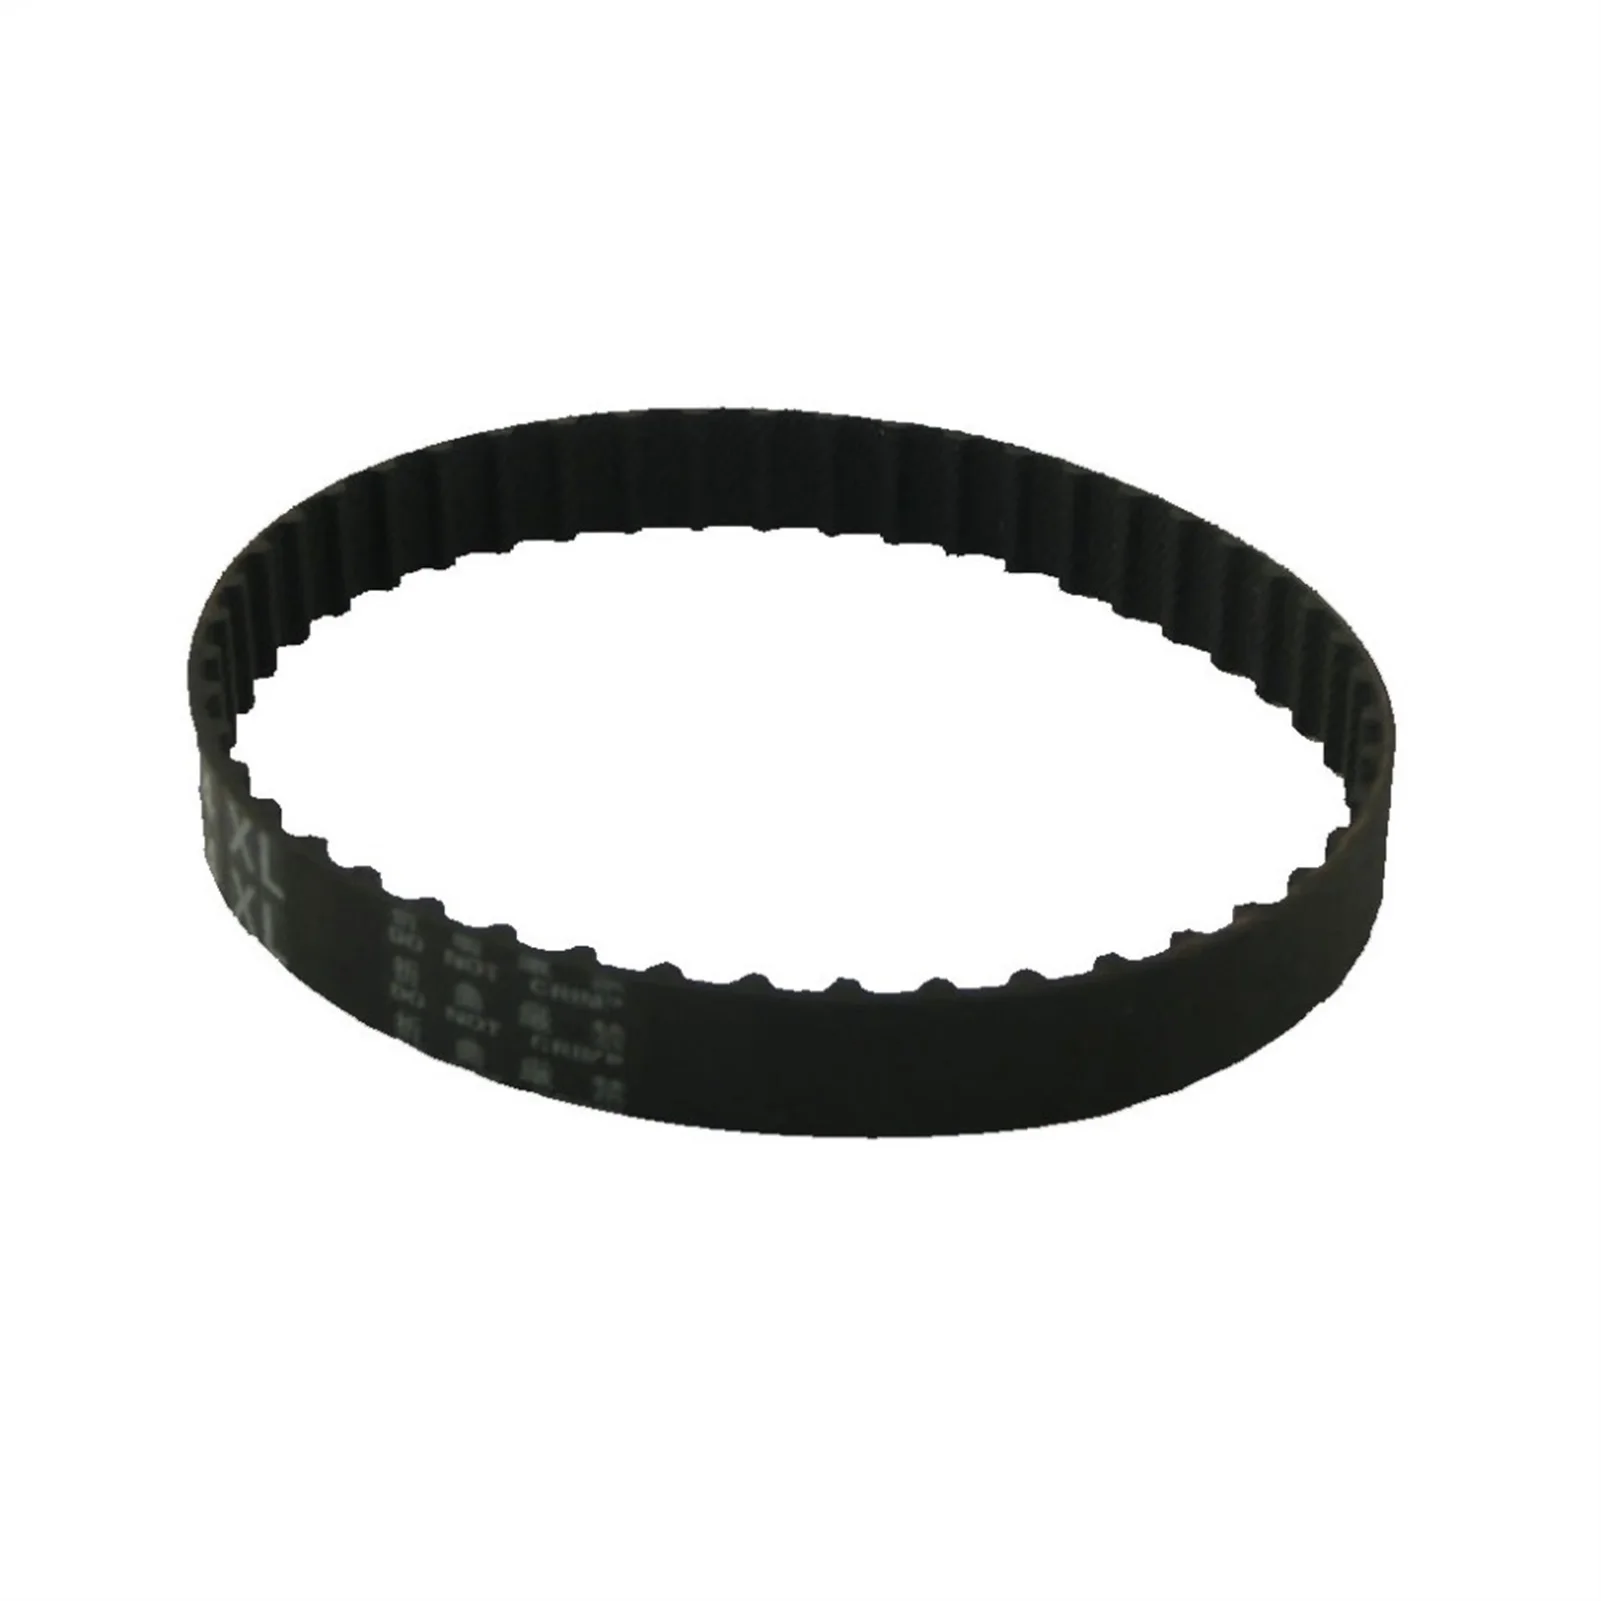 

XL Timing Belt, 10mm Width, 120/122/124/126/128/130/132/134/136/138XL, Black Rubber Gear Belts for Pulley Drive